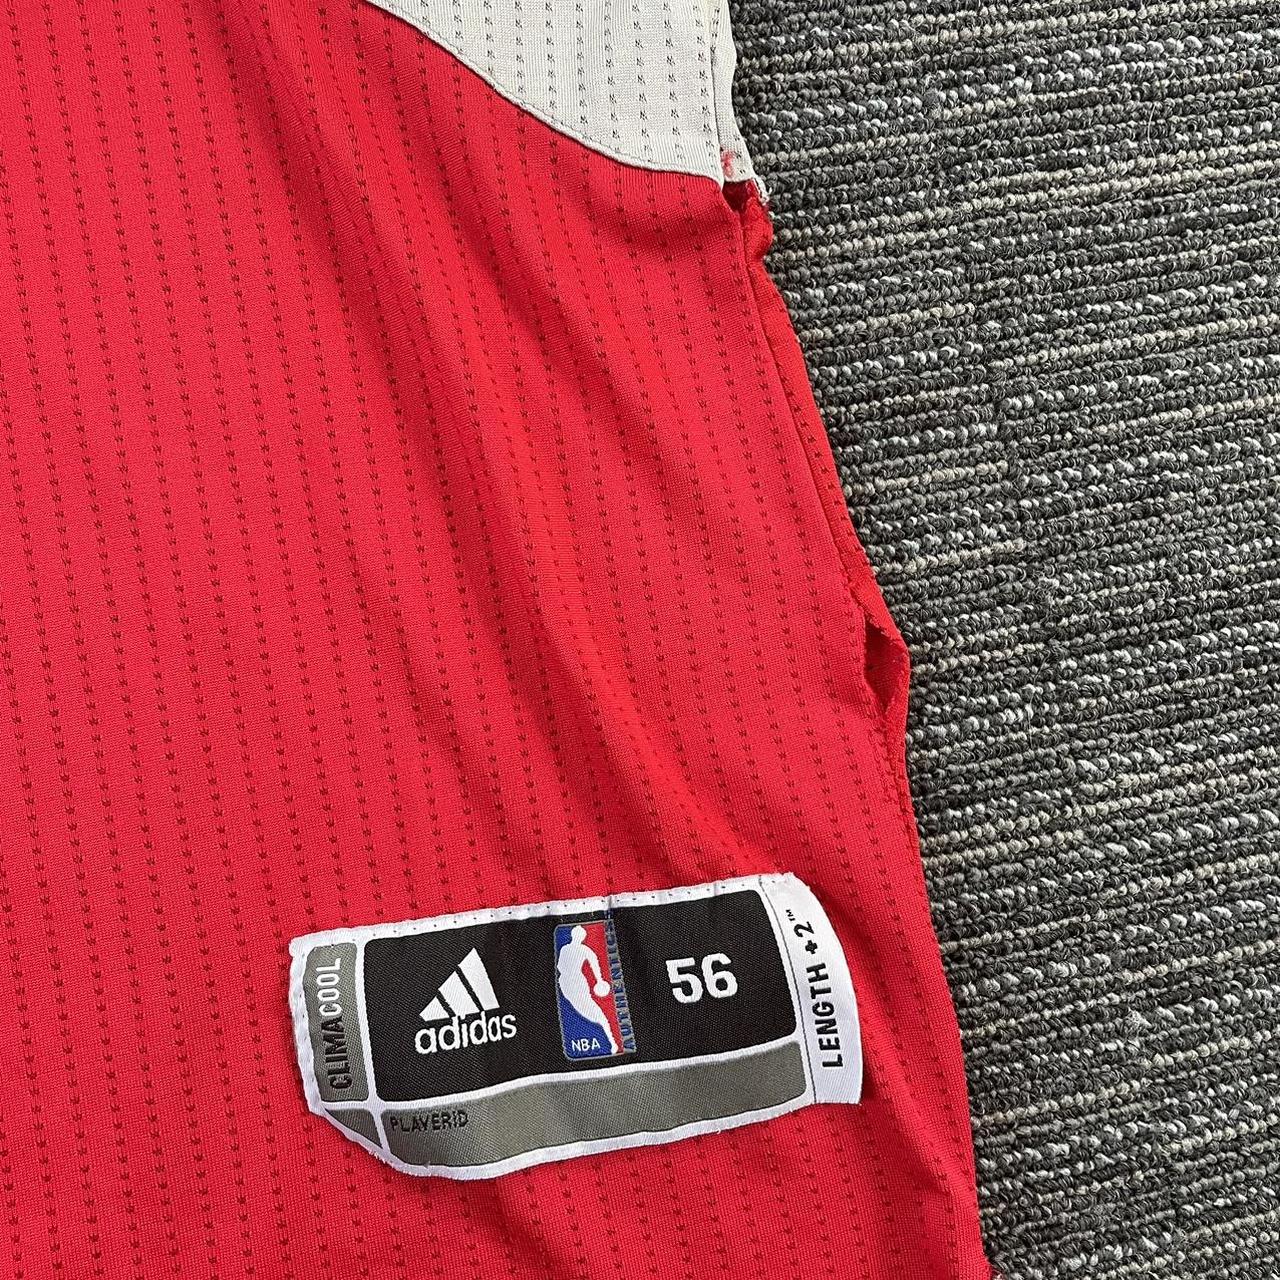 Rockets jersey, good condition. Jeremy Lin. Says - Depop